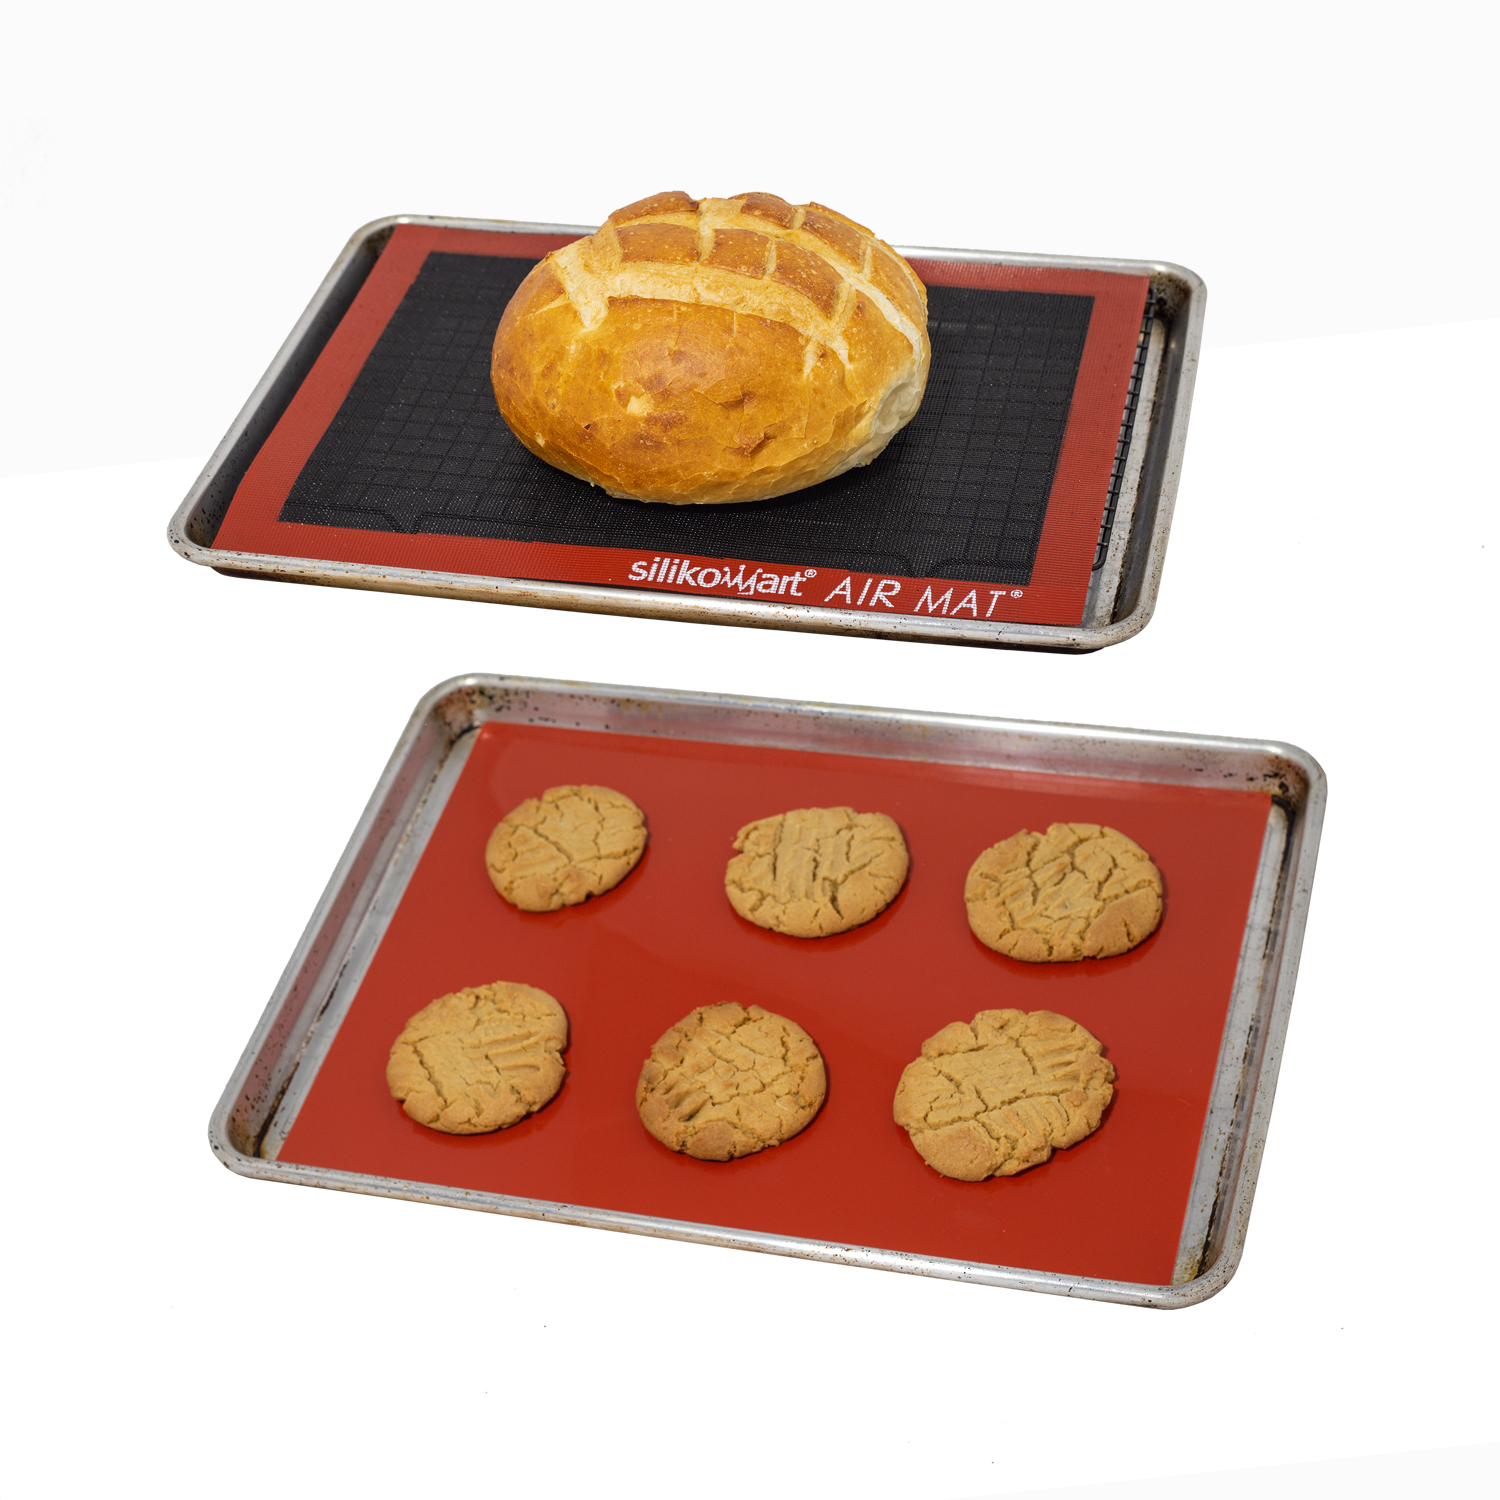 Bread Macaron Baking Mat Cake Sweeethome 3 Pcs Silicone Baking Mat Non Stick Liner Cookie Sheets Reusable Baking Mats for Macaron 3 pcs